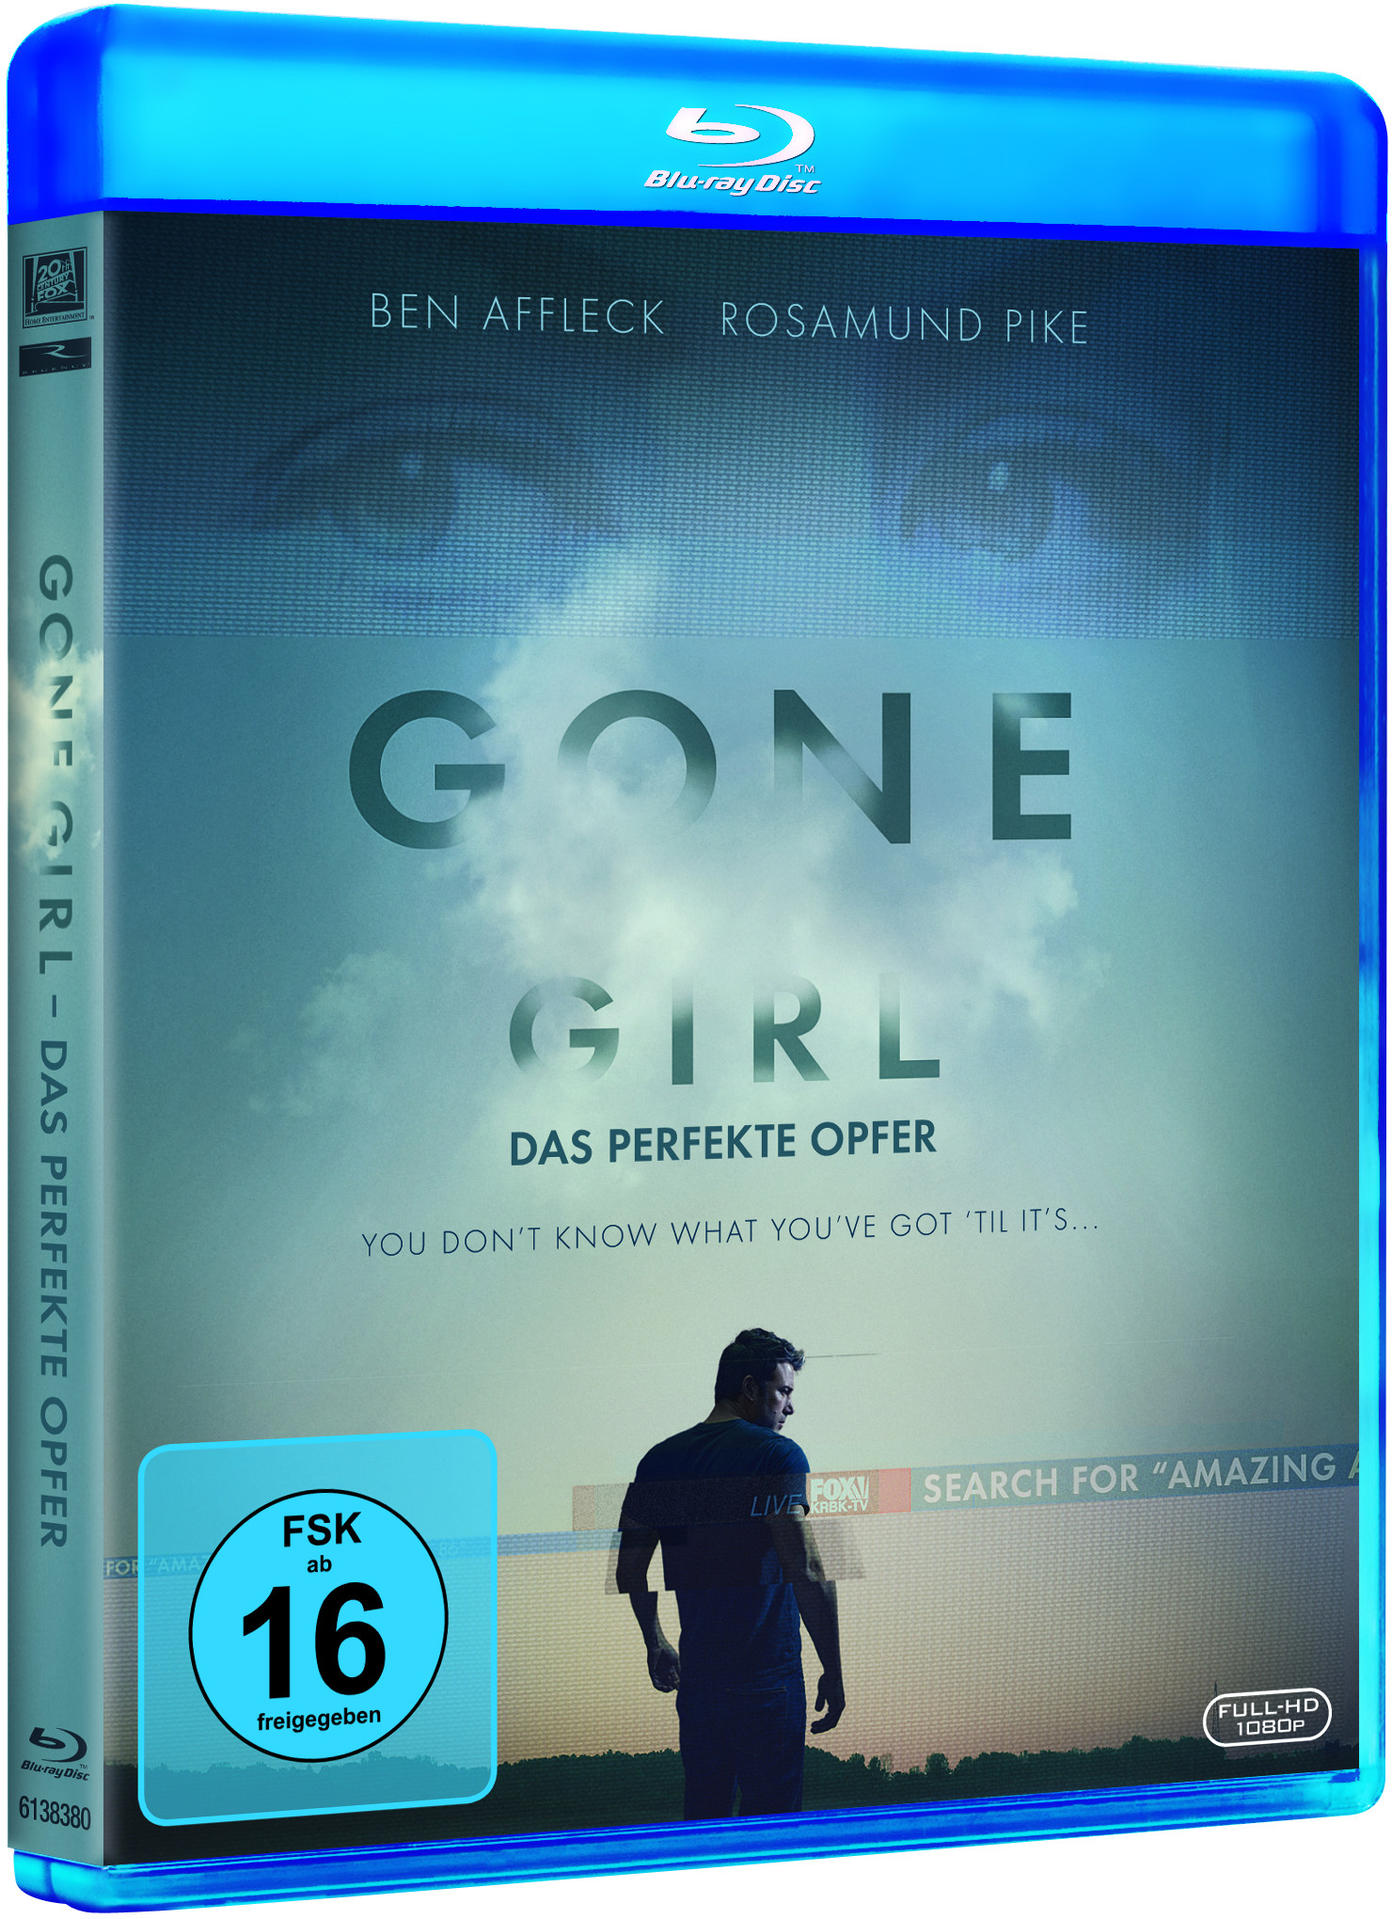 Girl Opfer Das Blu-ray - perfekte Gone